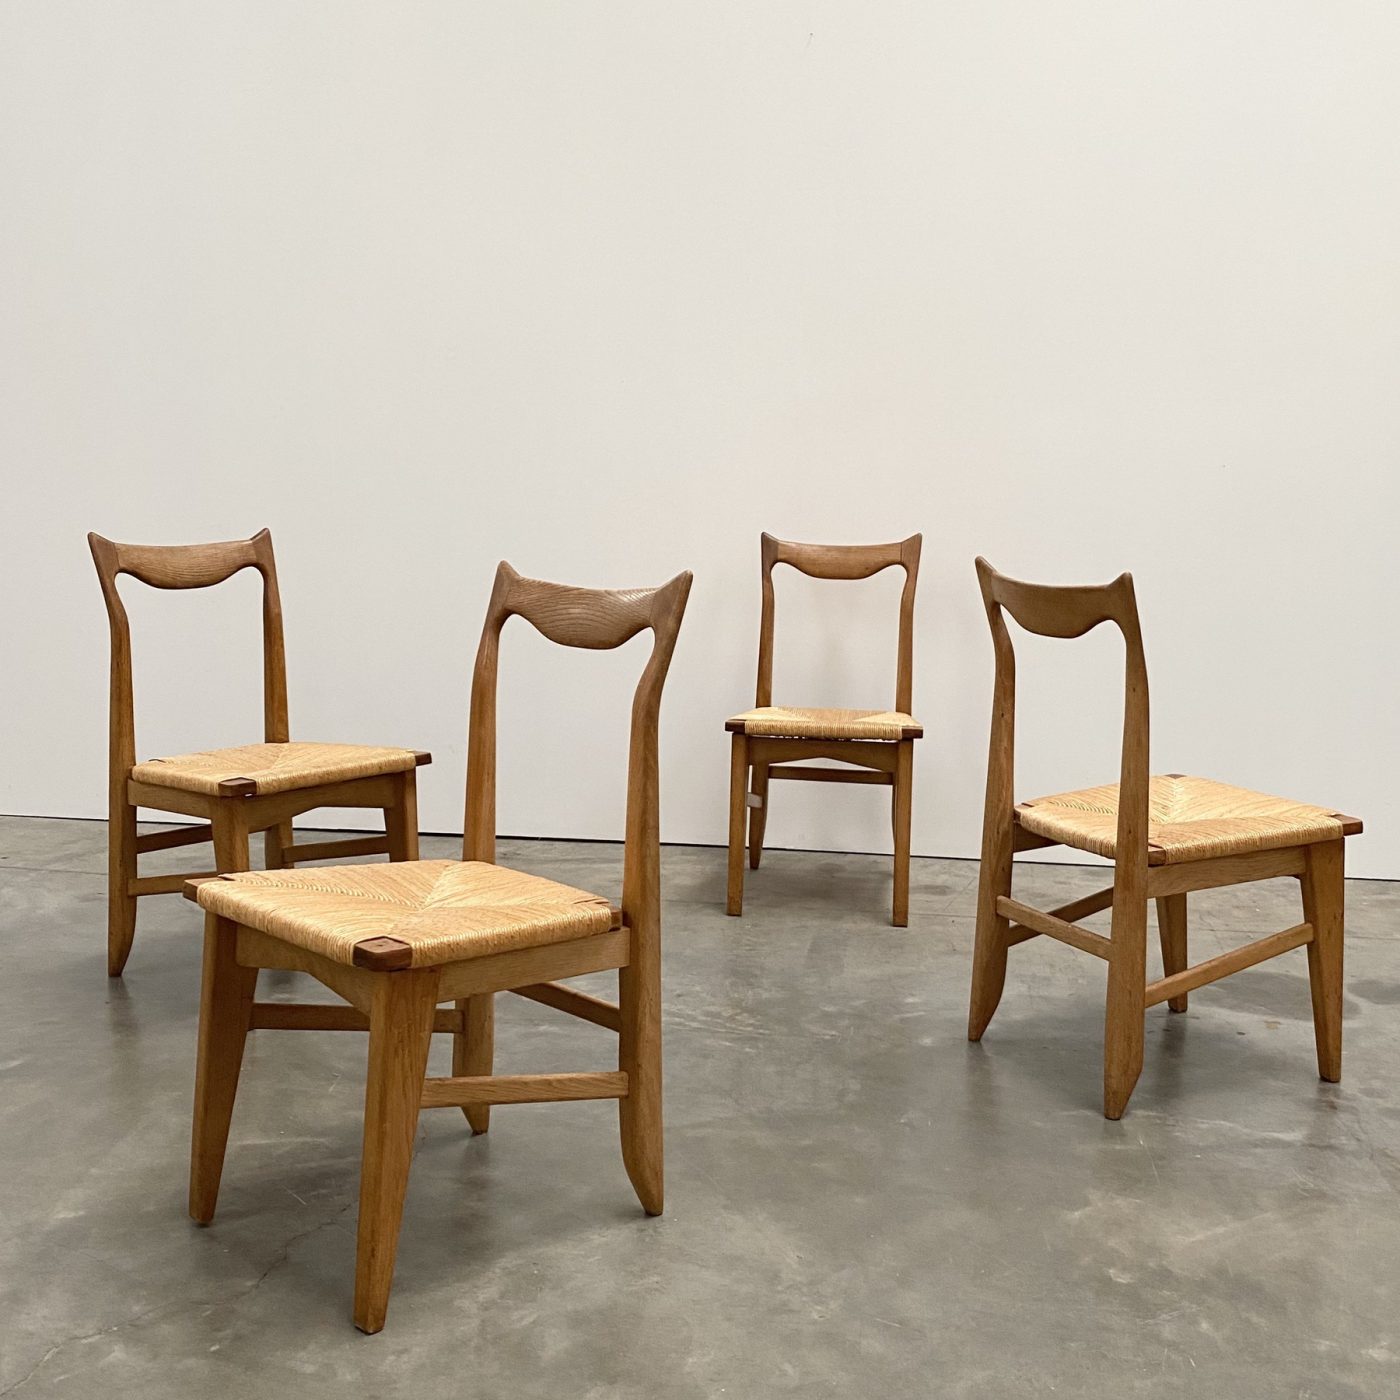 objet-vagabond-midcentury-chairs0012